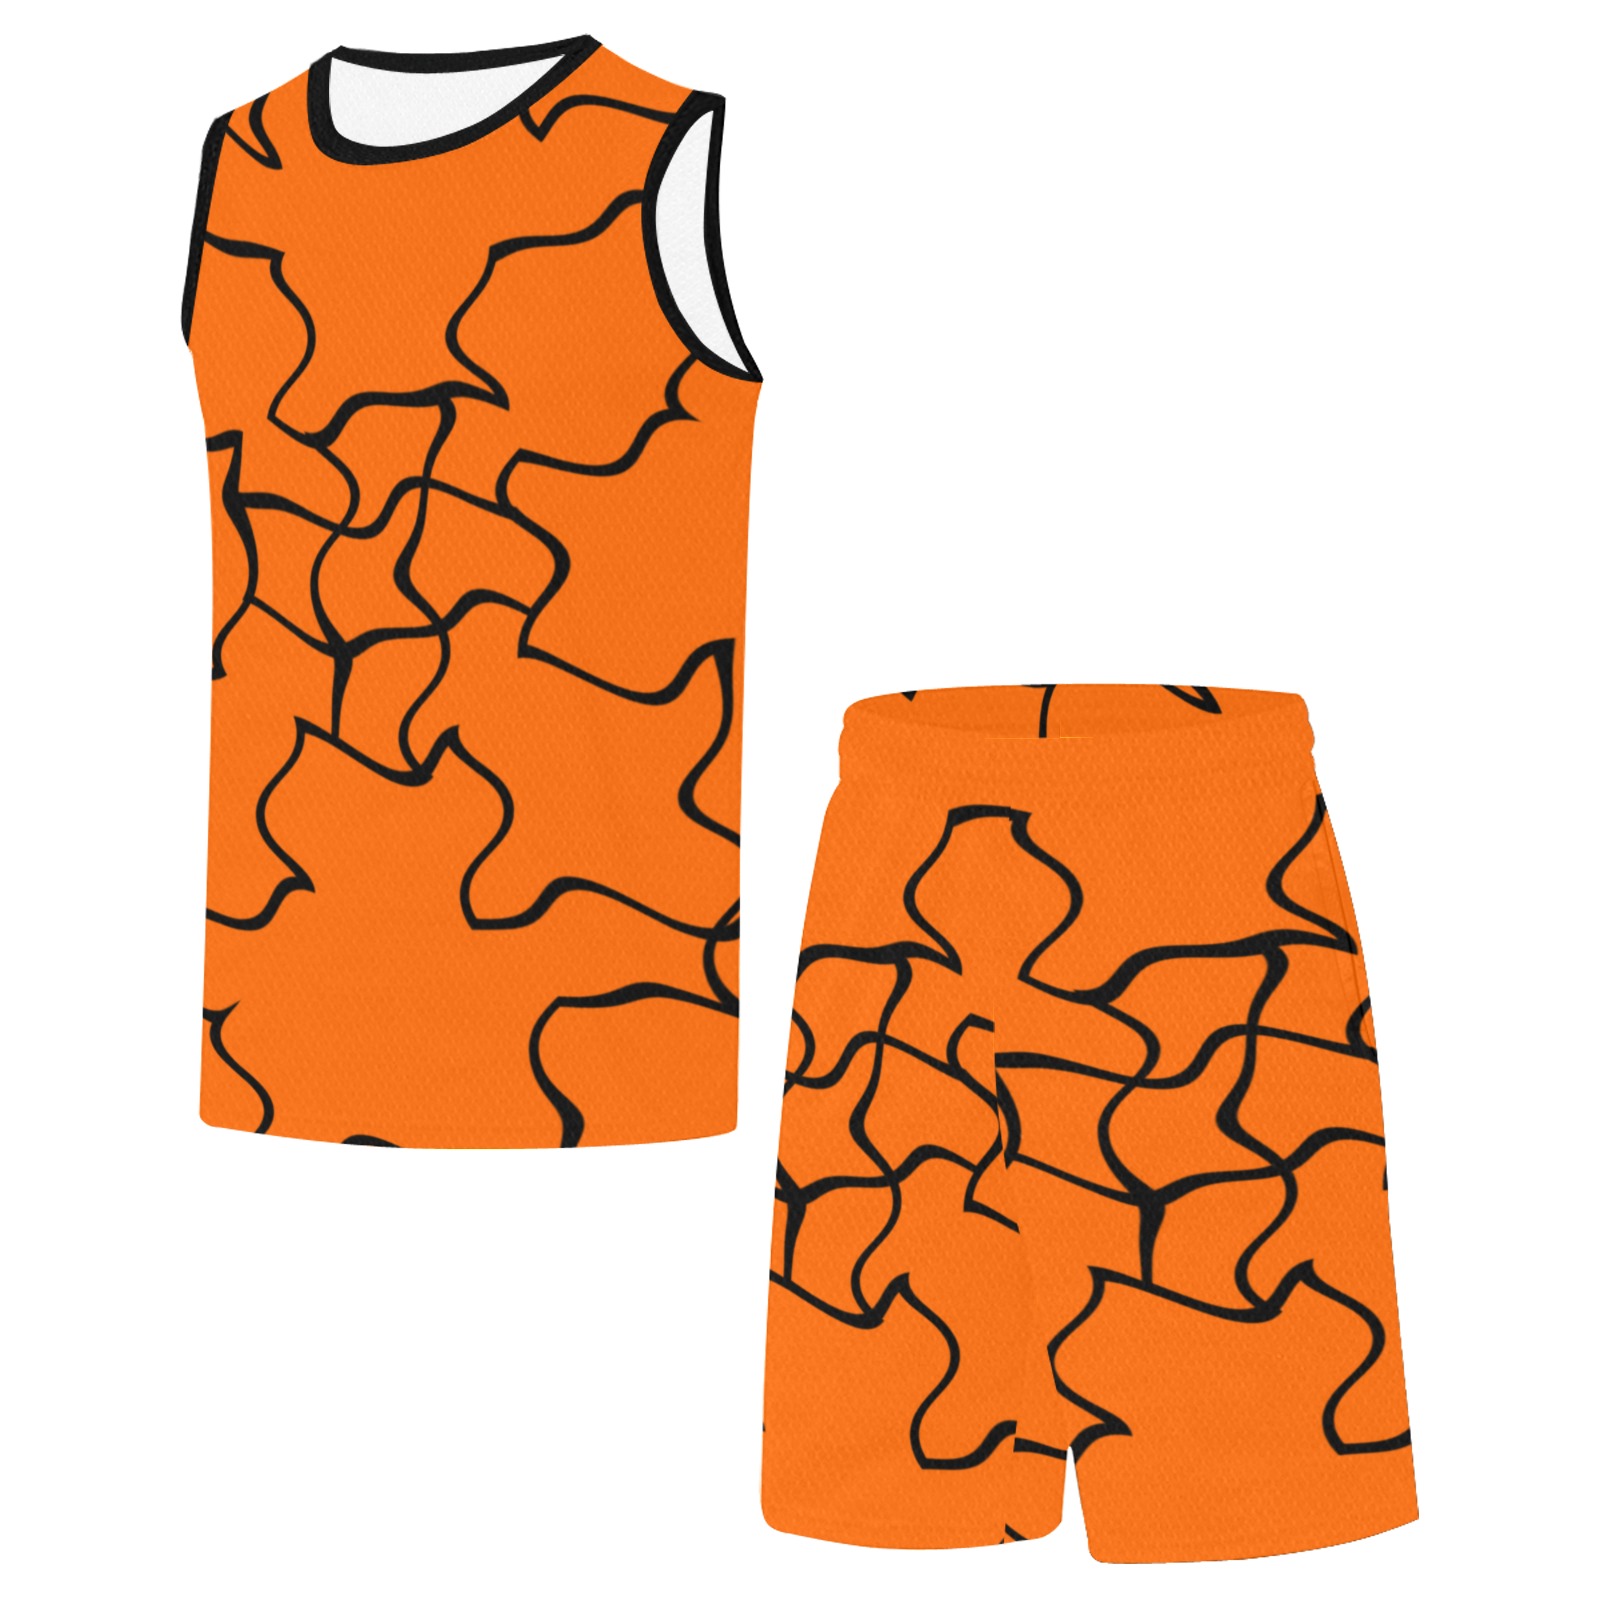 Black Interlocking Crosses Noisy orange Basketball Uniform with Pocket